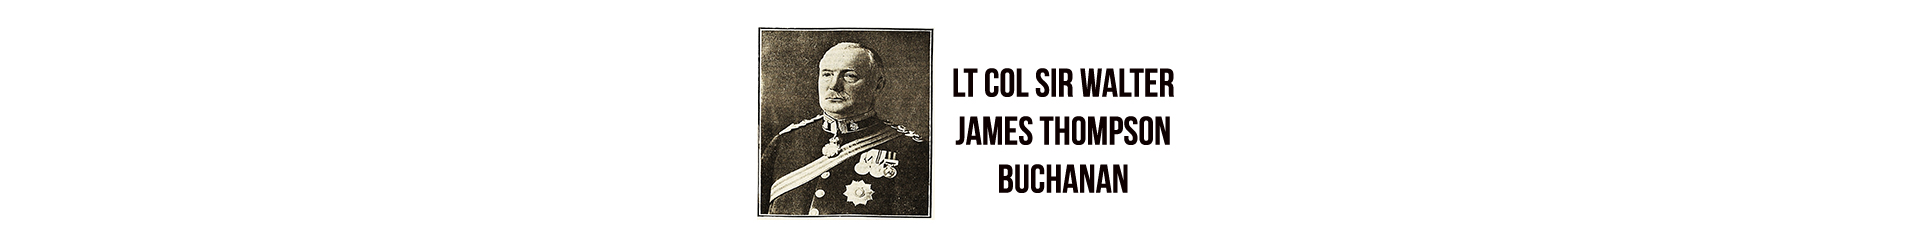 Lt Col Sir Walter James Thompson Buchanan K.C.I.E